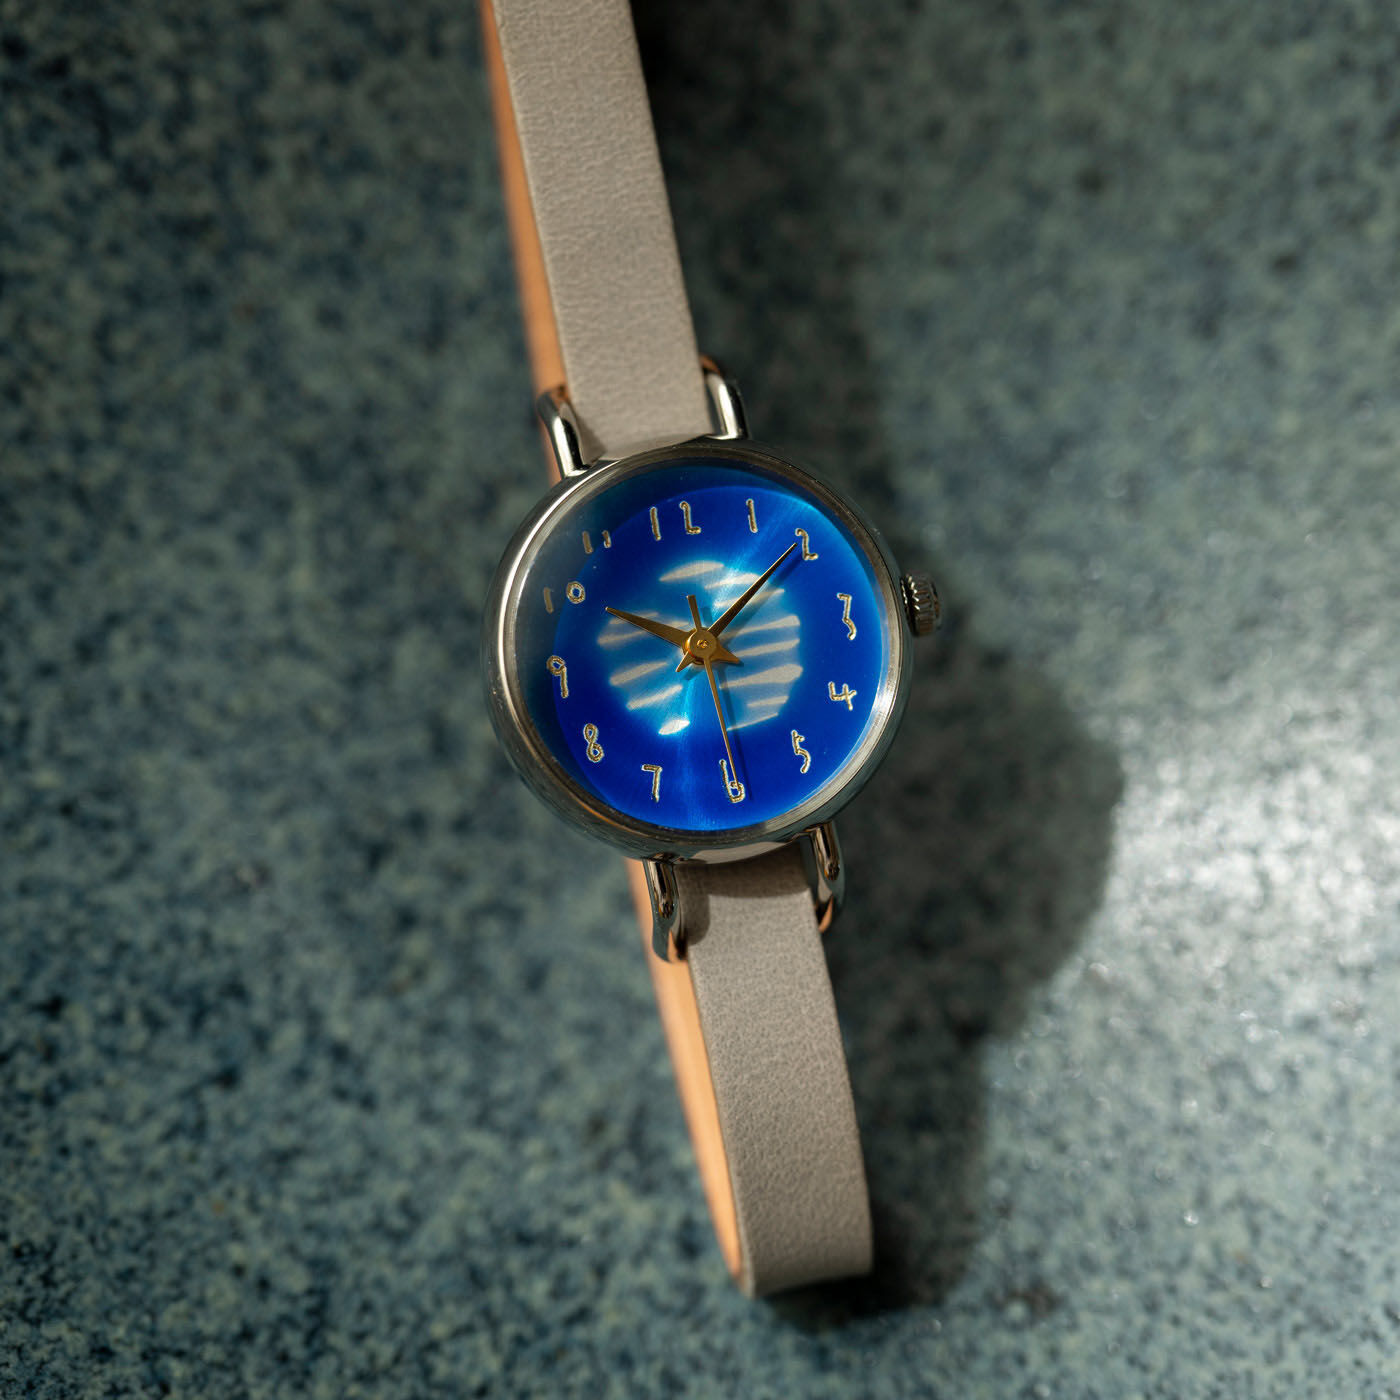 ＆Stories|金沢の時計職人が手掛けた 水面に映る朧月に見惚れる腕時計〈グレー〉|金沢の時計工房のアートディレクター・牛島孝さんが、「水面に映る朧月」を表現したスペシャルな腕時計。